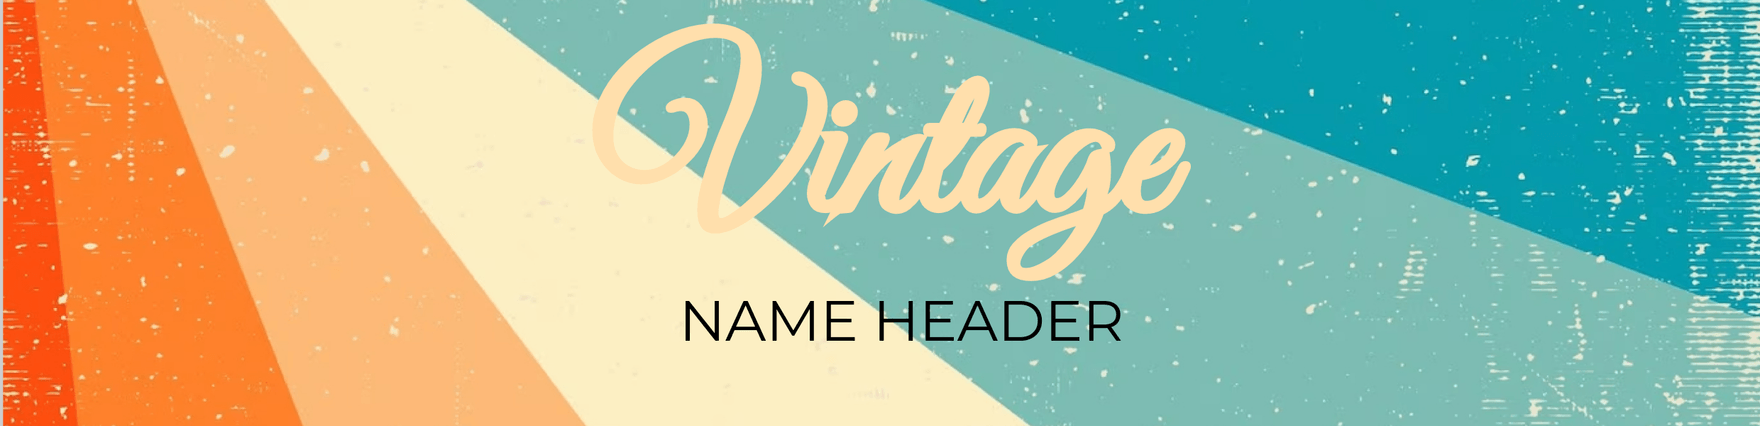 Vintage Name Header